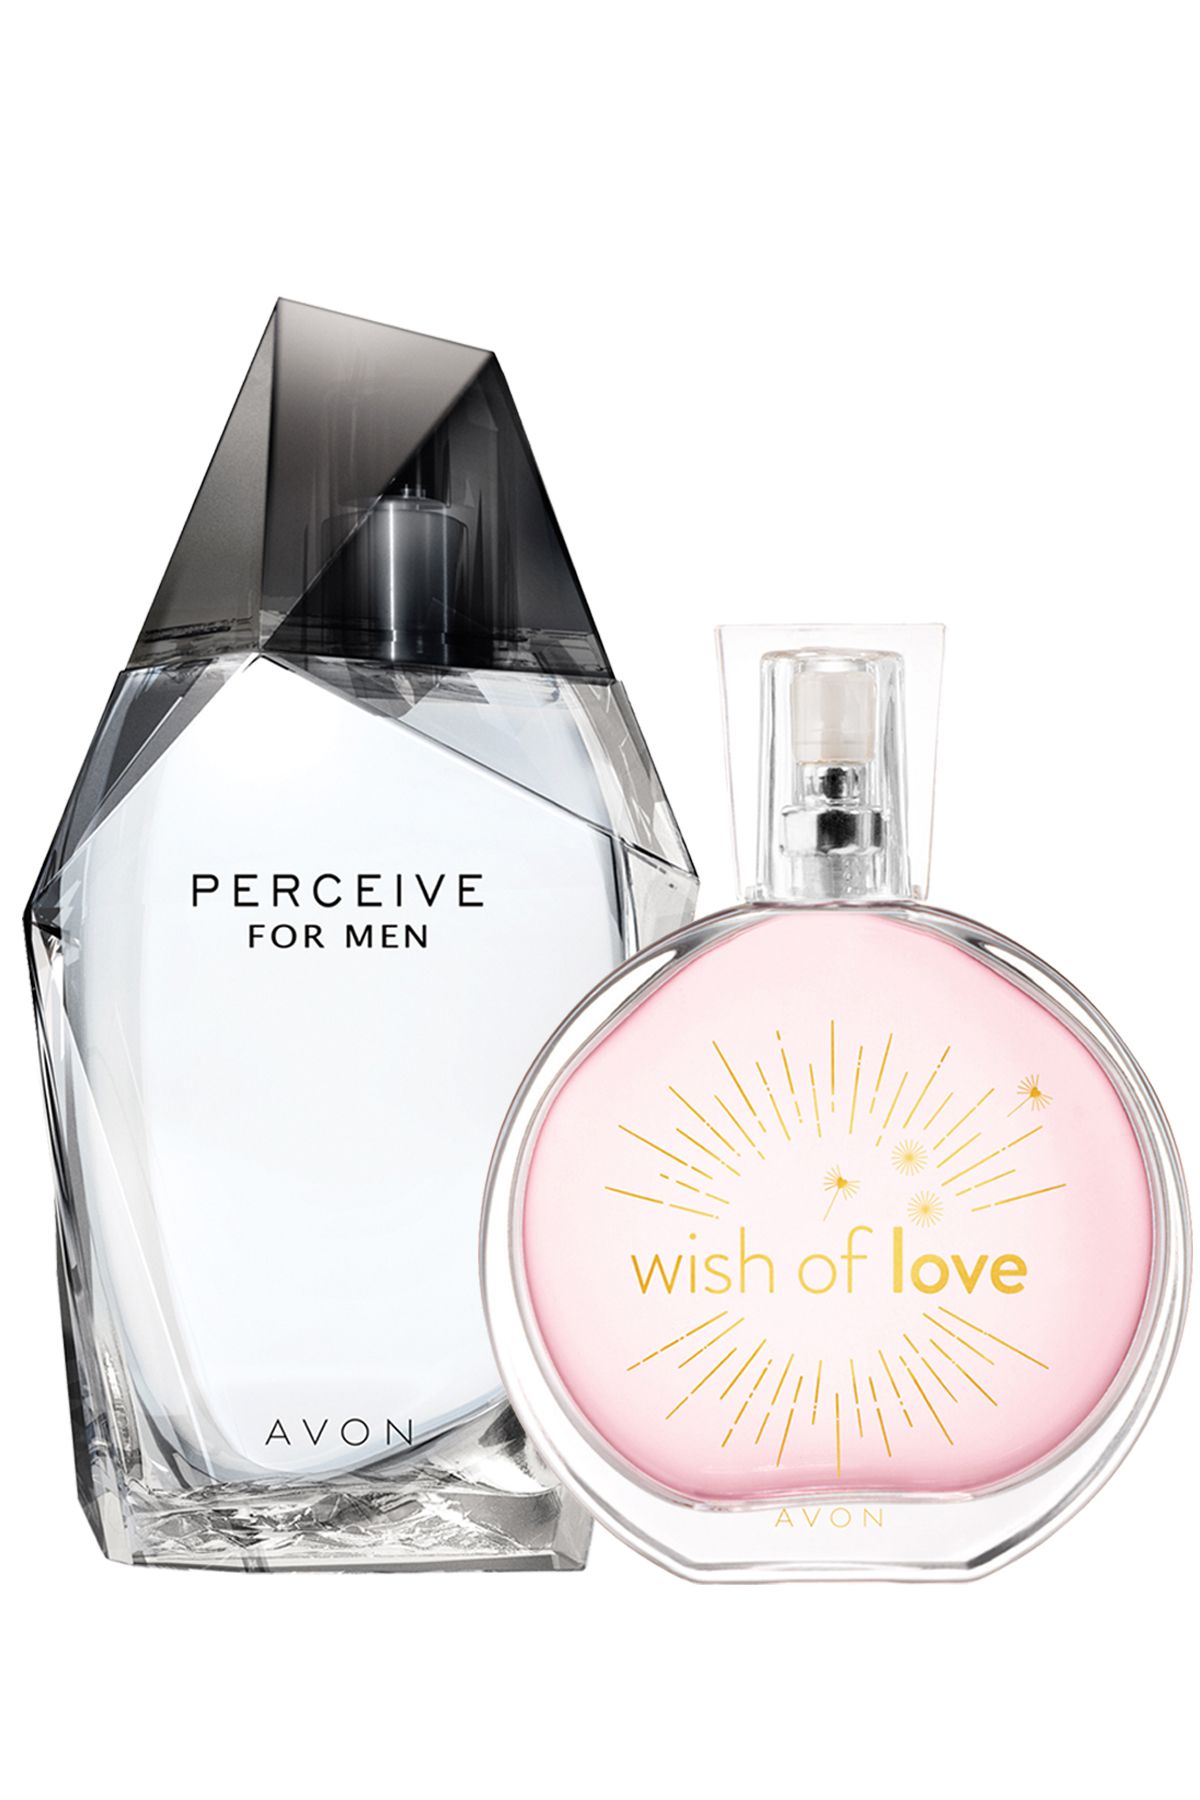 Avon Perceive Erkek Parfüm Ve Wish Of Love Kadın Parfüm Paketi